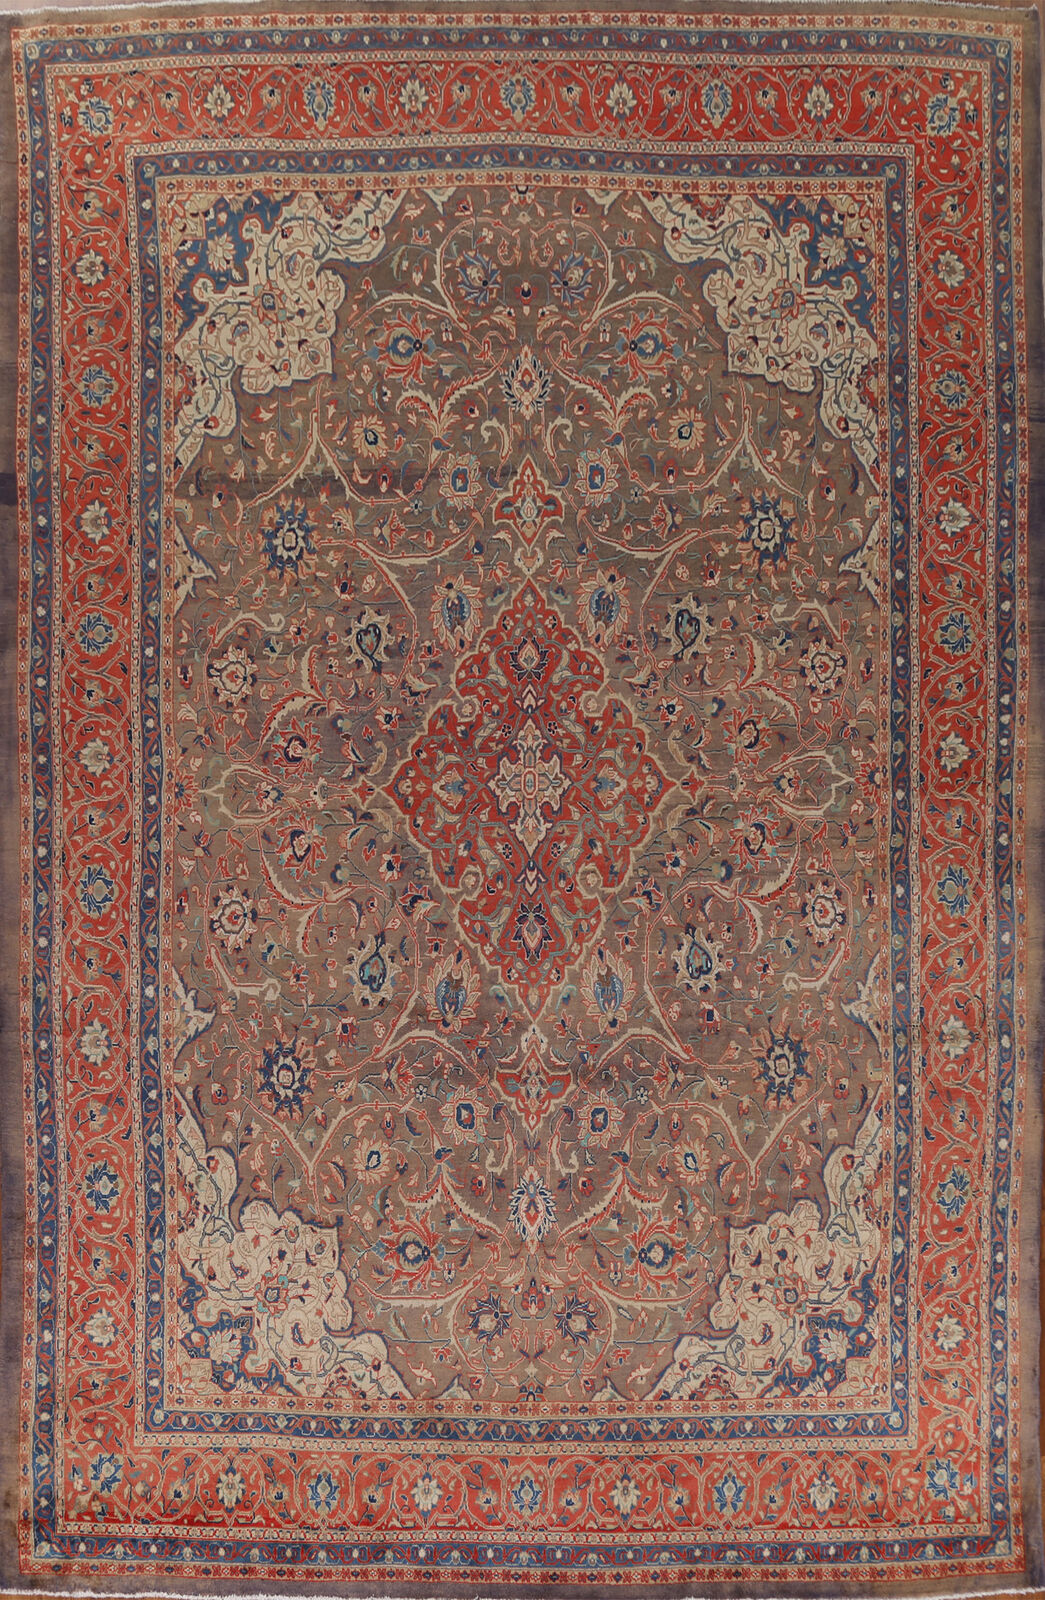 Vintage Brown/ Orange Wool Saroouk Handmade Living Room Area Rug 9x13 Carpet